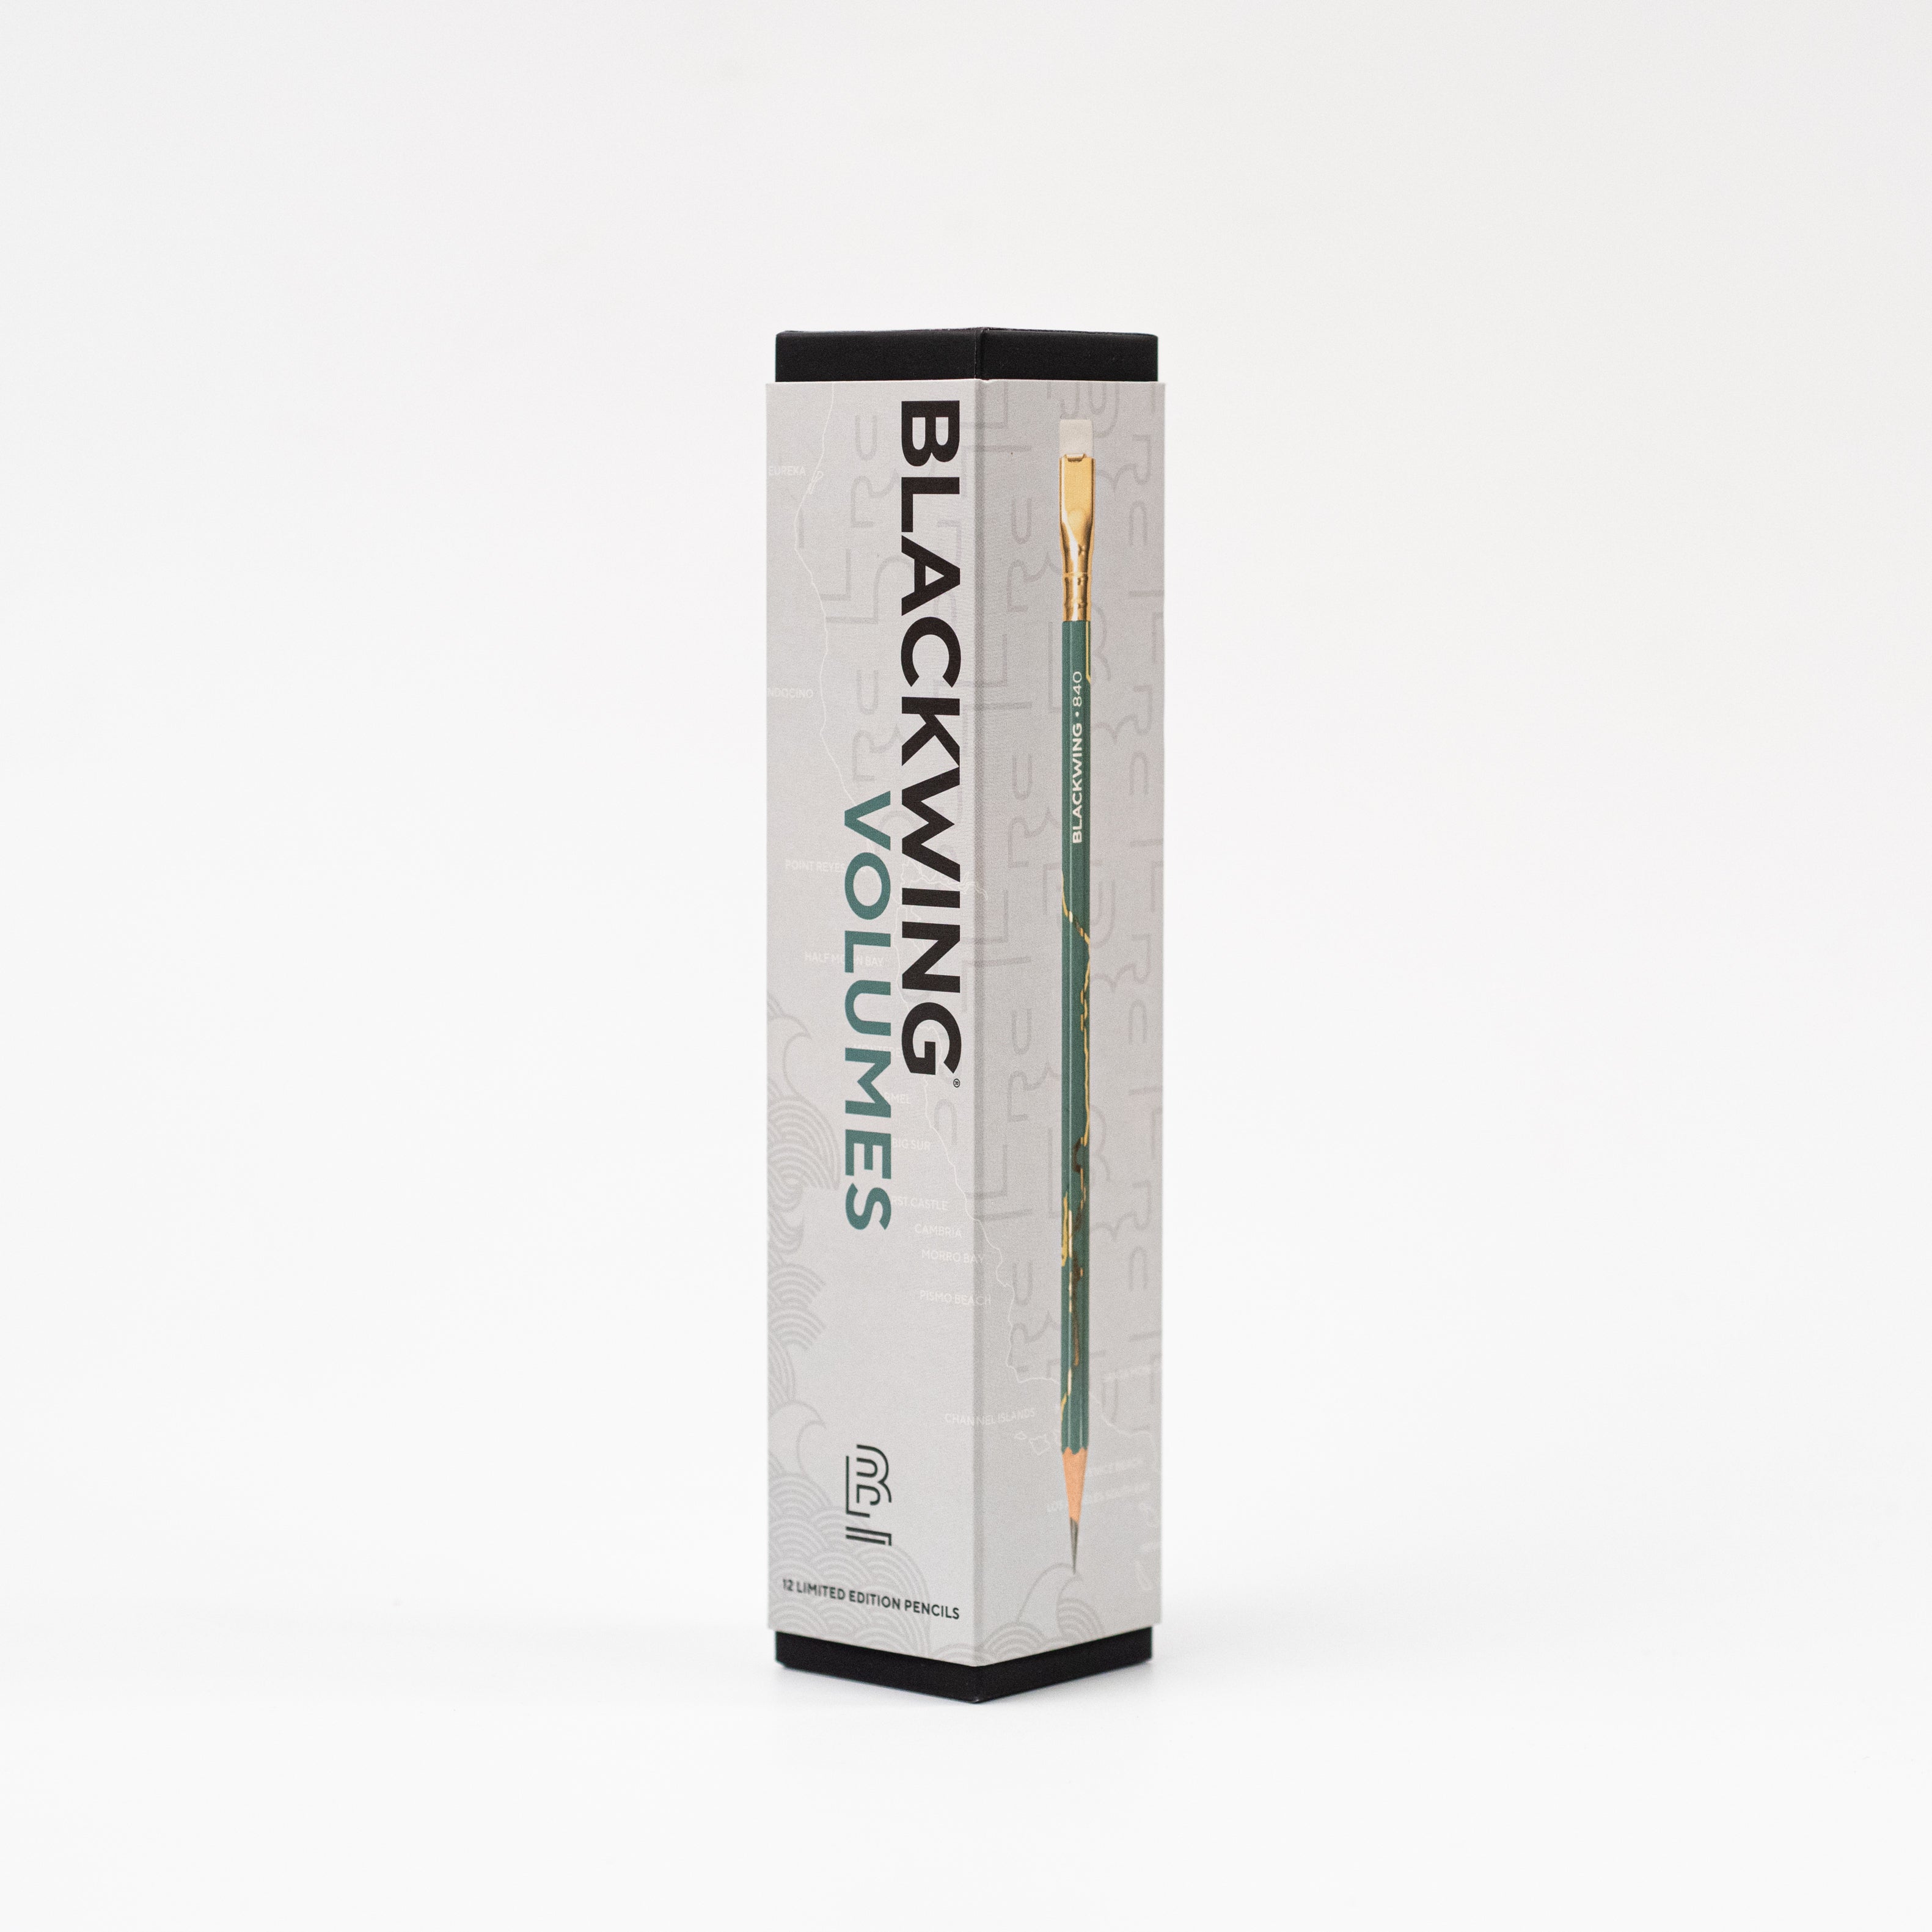 Blackwing Volume 840 Pencil 12 Pack box.